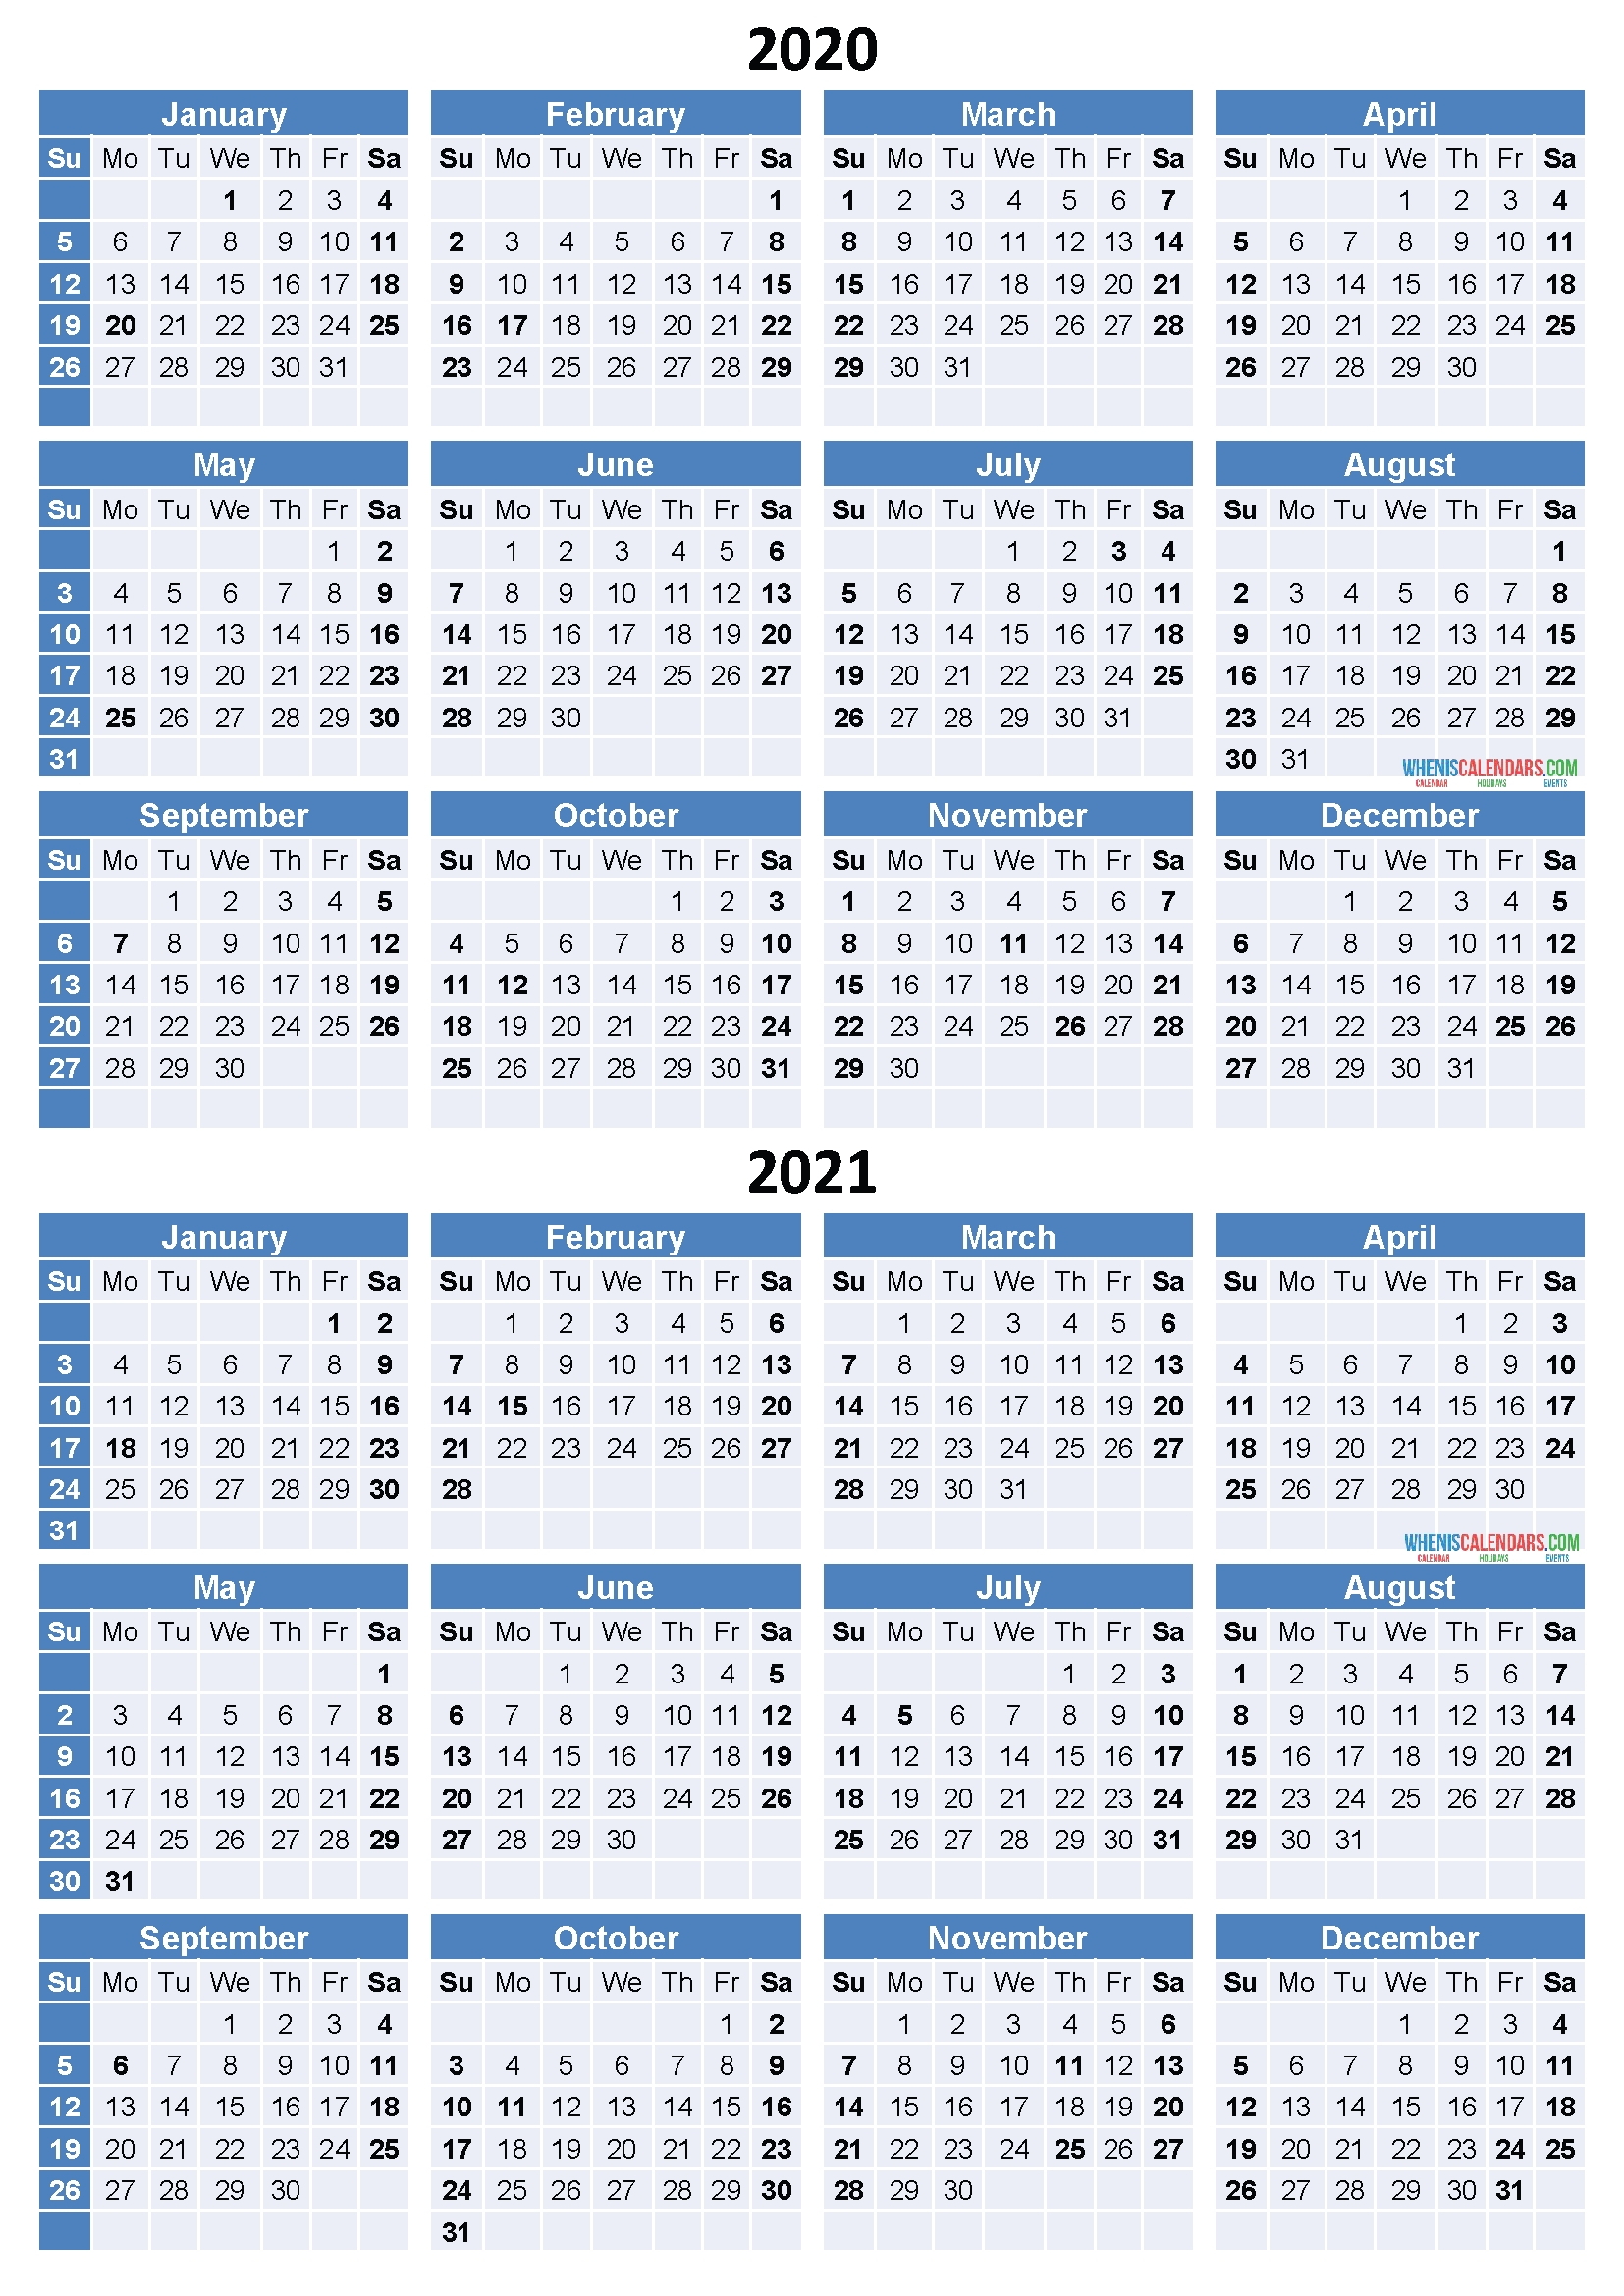 Depo Provera Calendar 2021 Printable | Calendar Printables Free Blank-October 2021 Calendar W Jewish Holidays